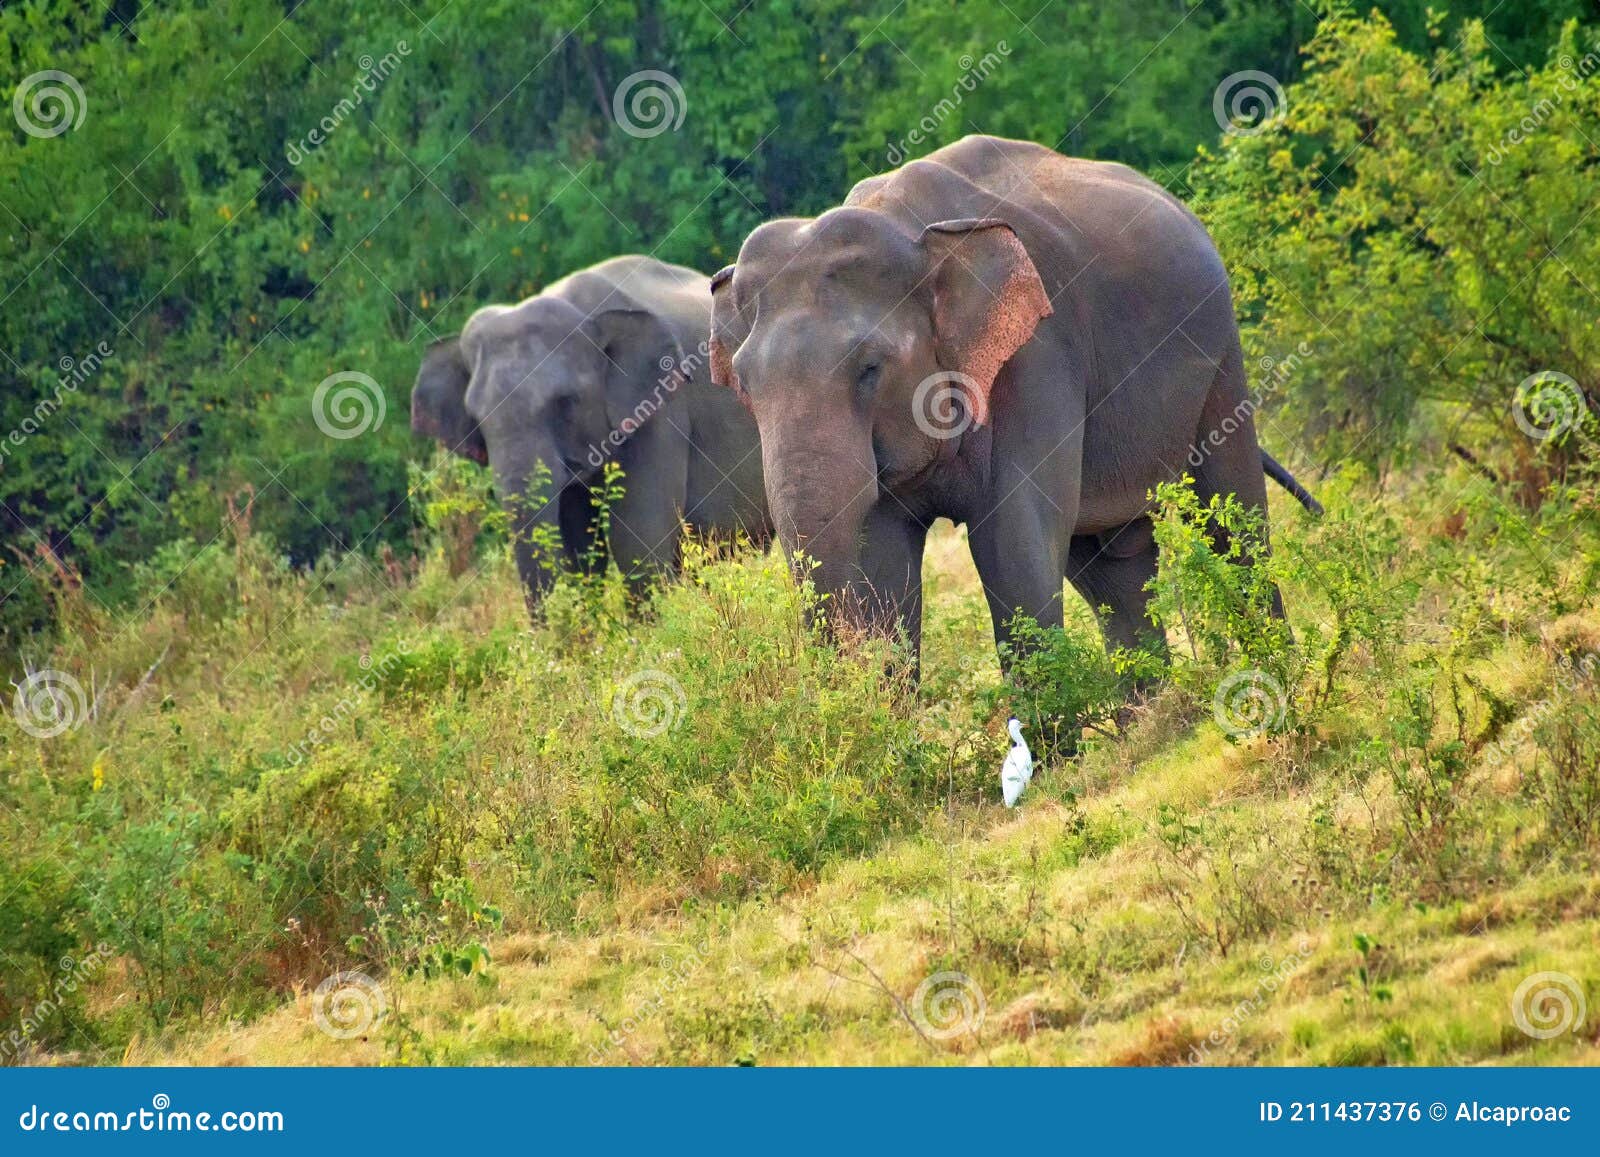 sri lankan elephant, kaudulla national park, sri lanka